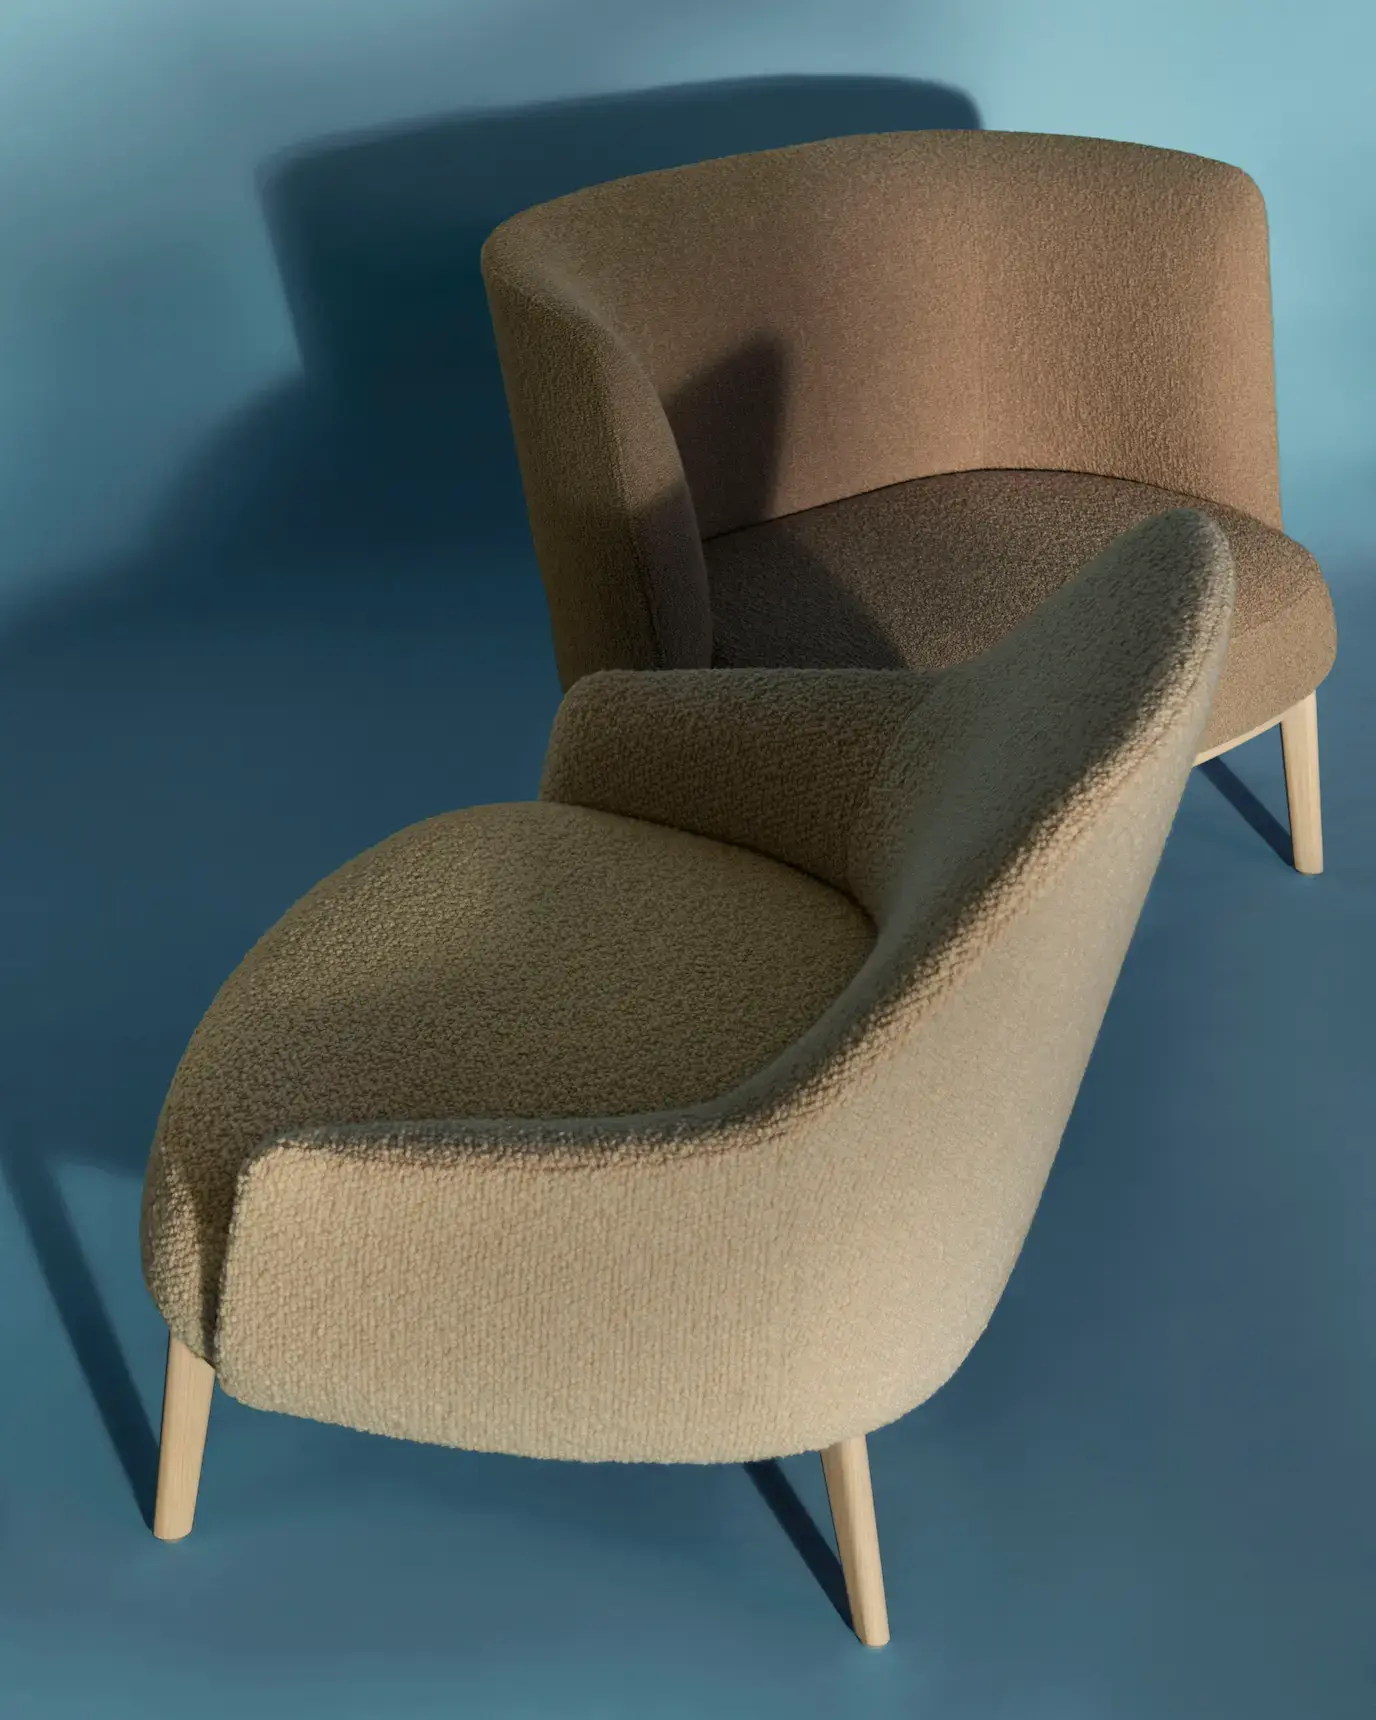 Shift Wood-Classic and High_easy chair-Daniel Debiasi and Federico Sandri_Offecct